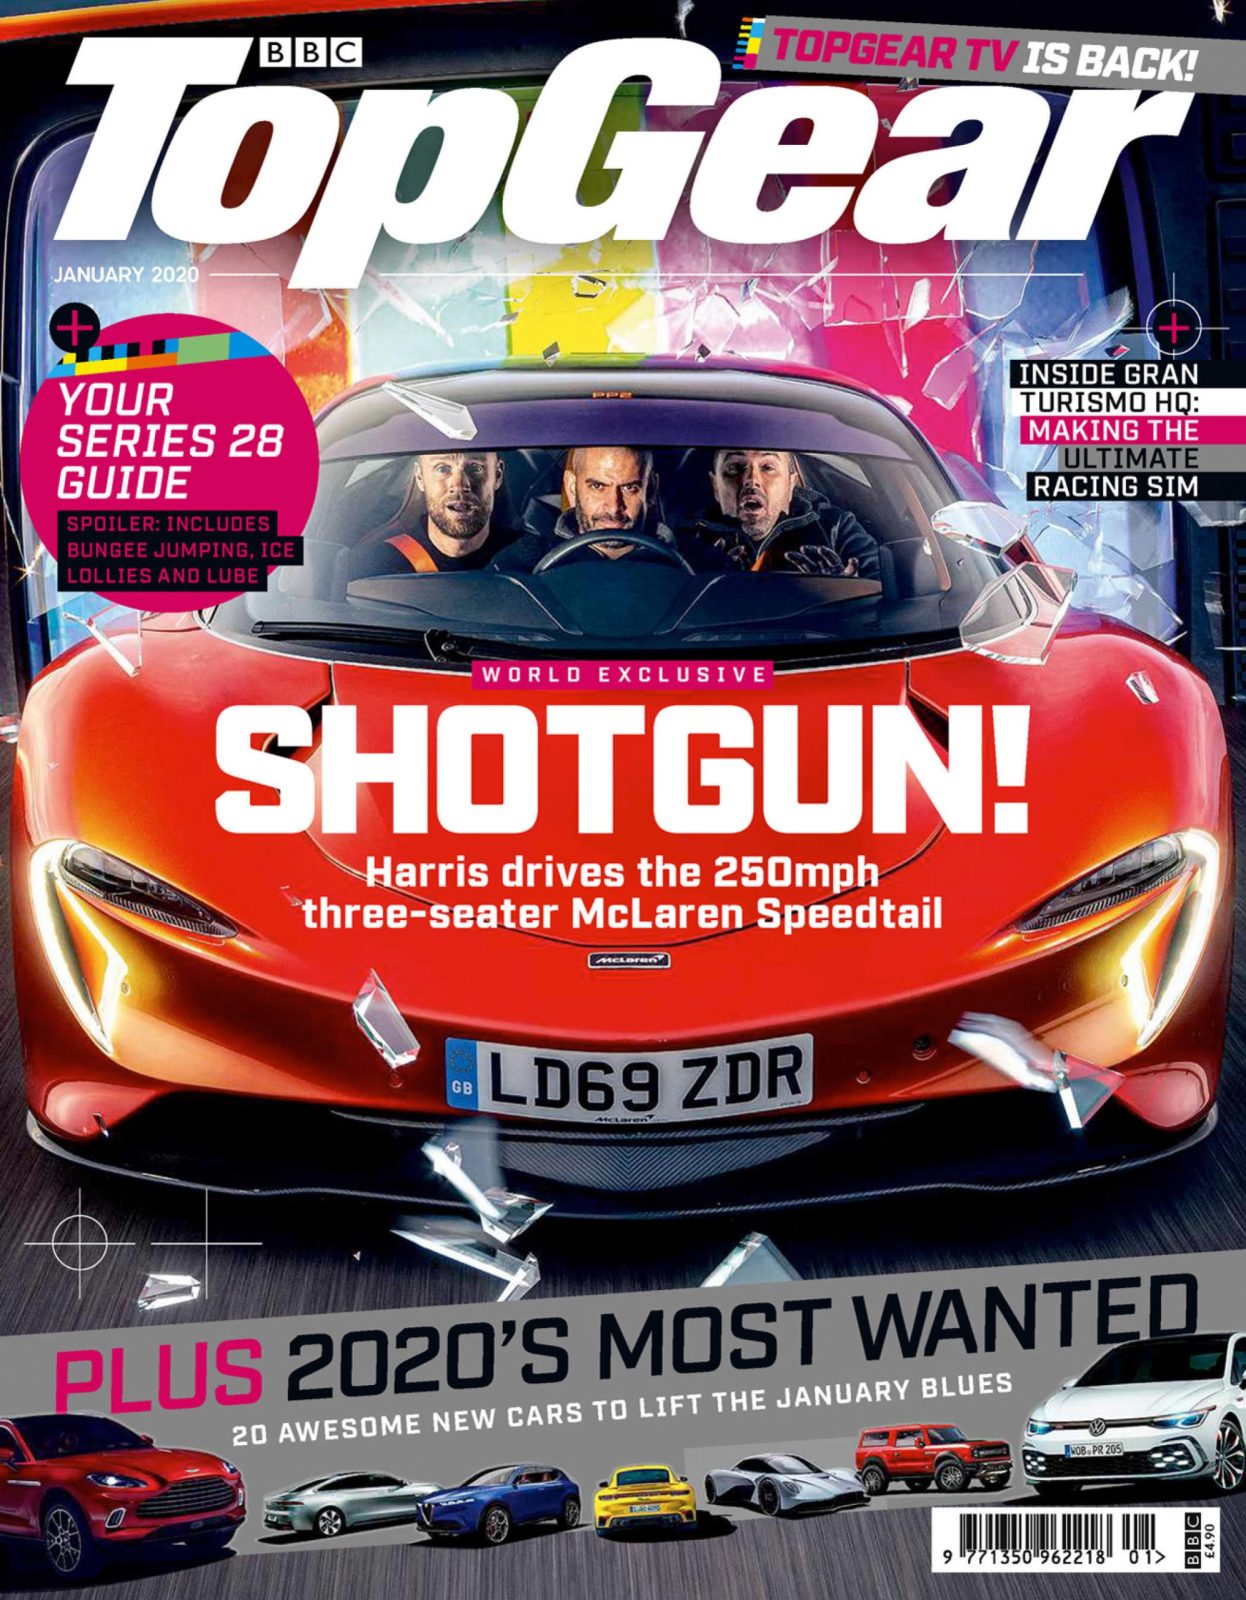 BBC Top Gear BBC疯狂汽车秀杂志  JANUARY 2020年1月刊